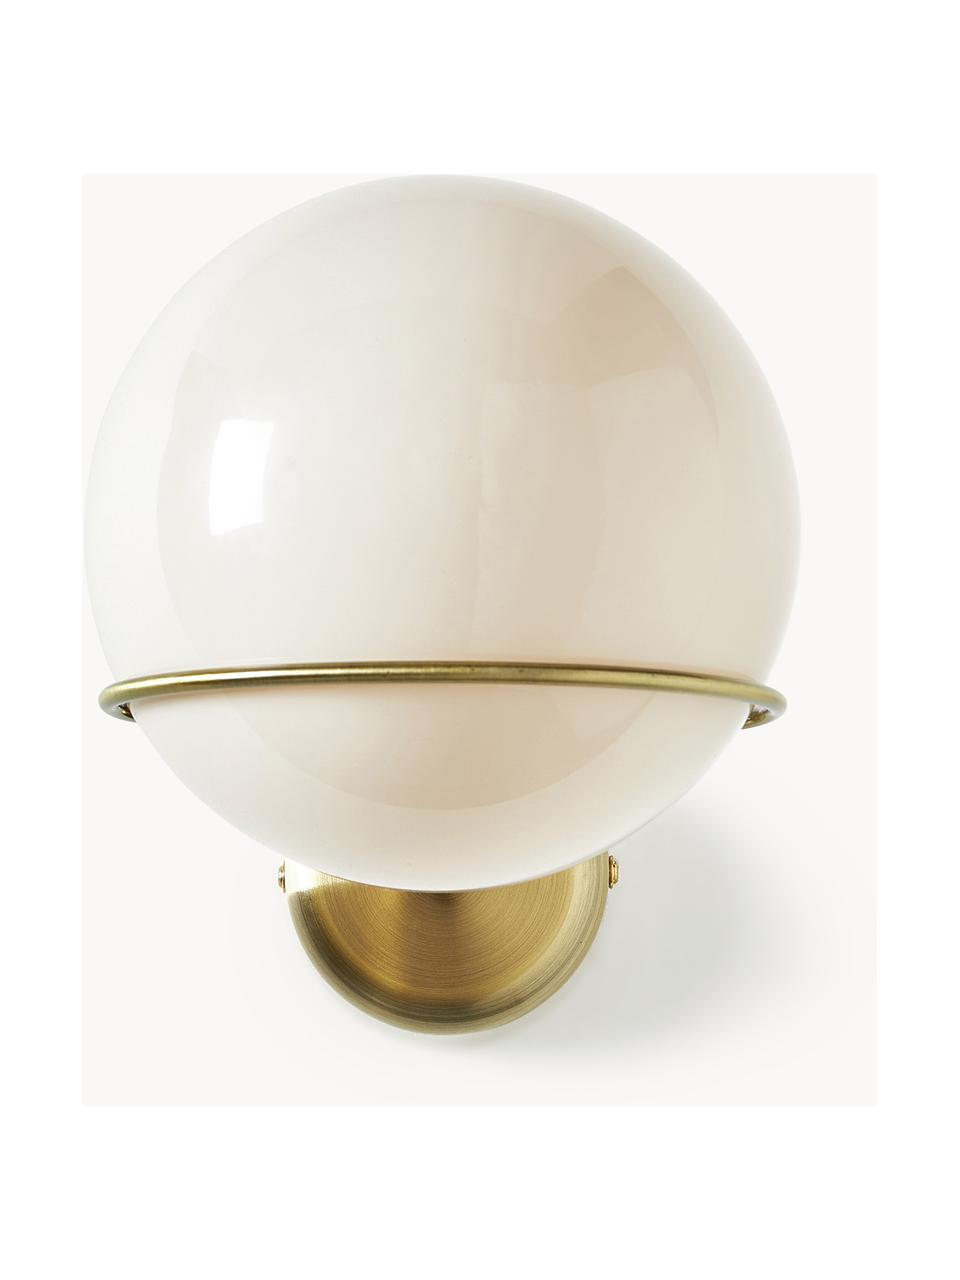 Aplique esferico de vidrio Carey, Pantalla: vidrio, Anclaje: metal, Blanco crema, dorado, Ø 16 x Al 18 cm